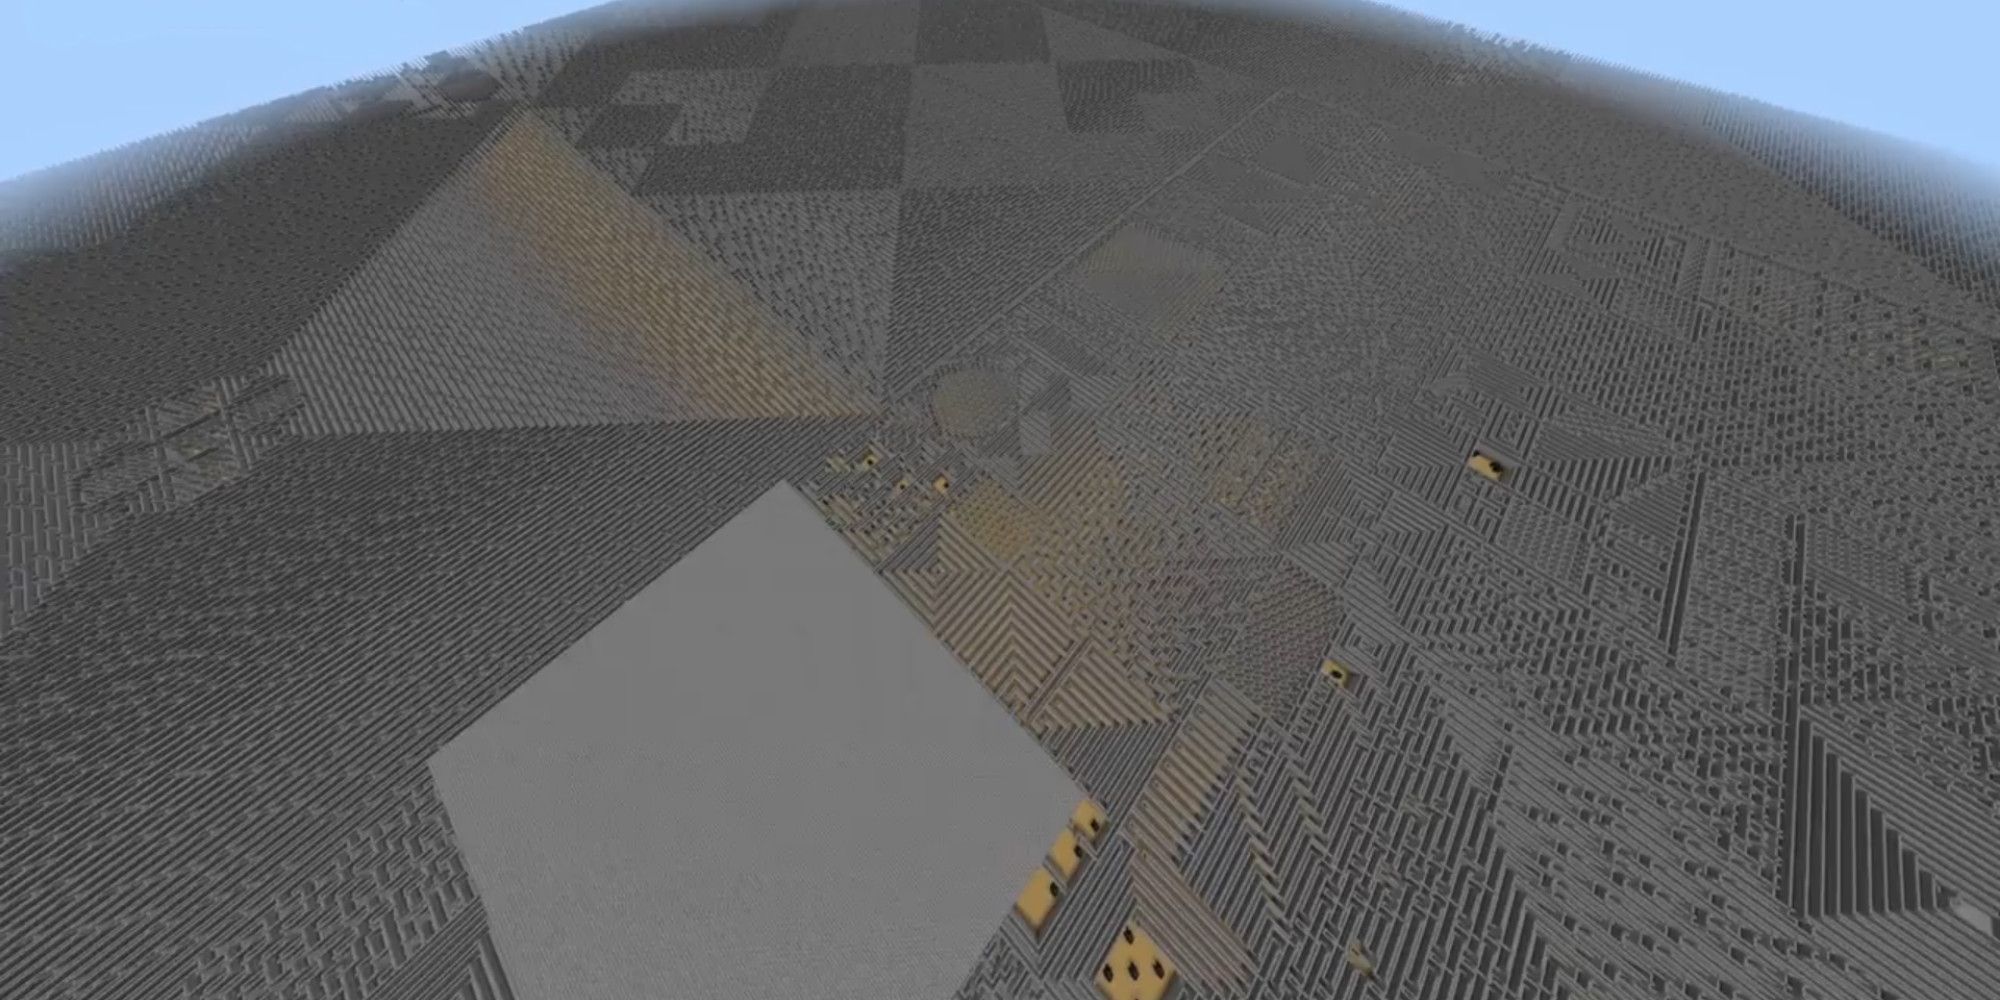 A birdseye view of a massive stone maze in Minecraft